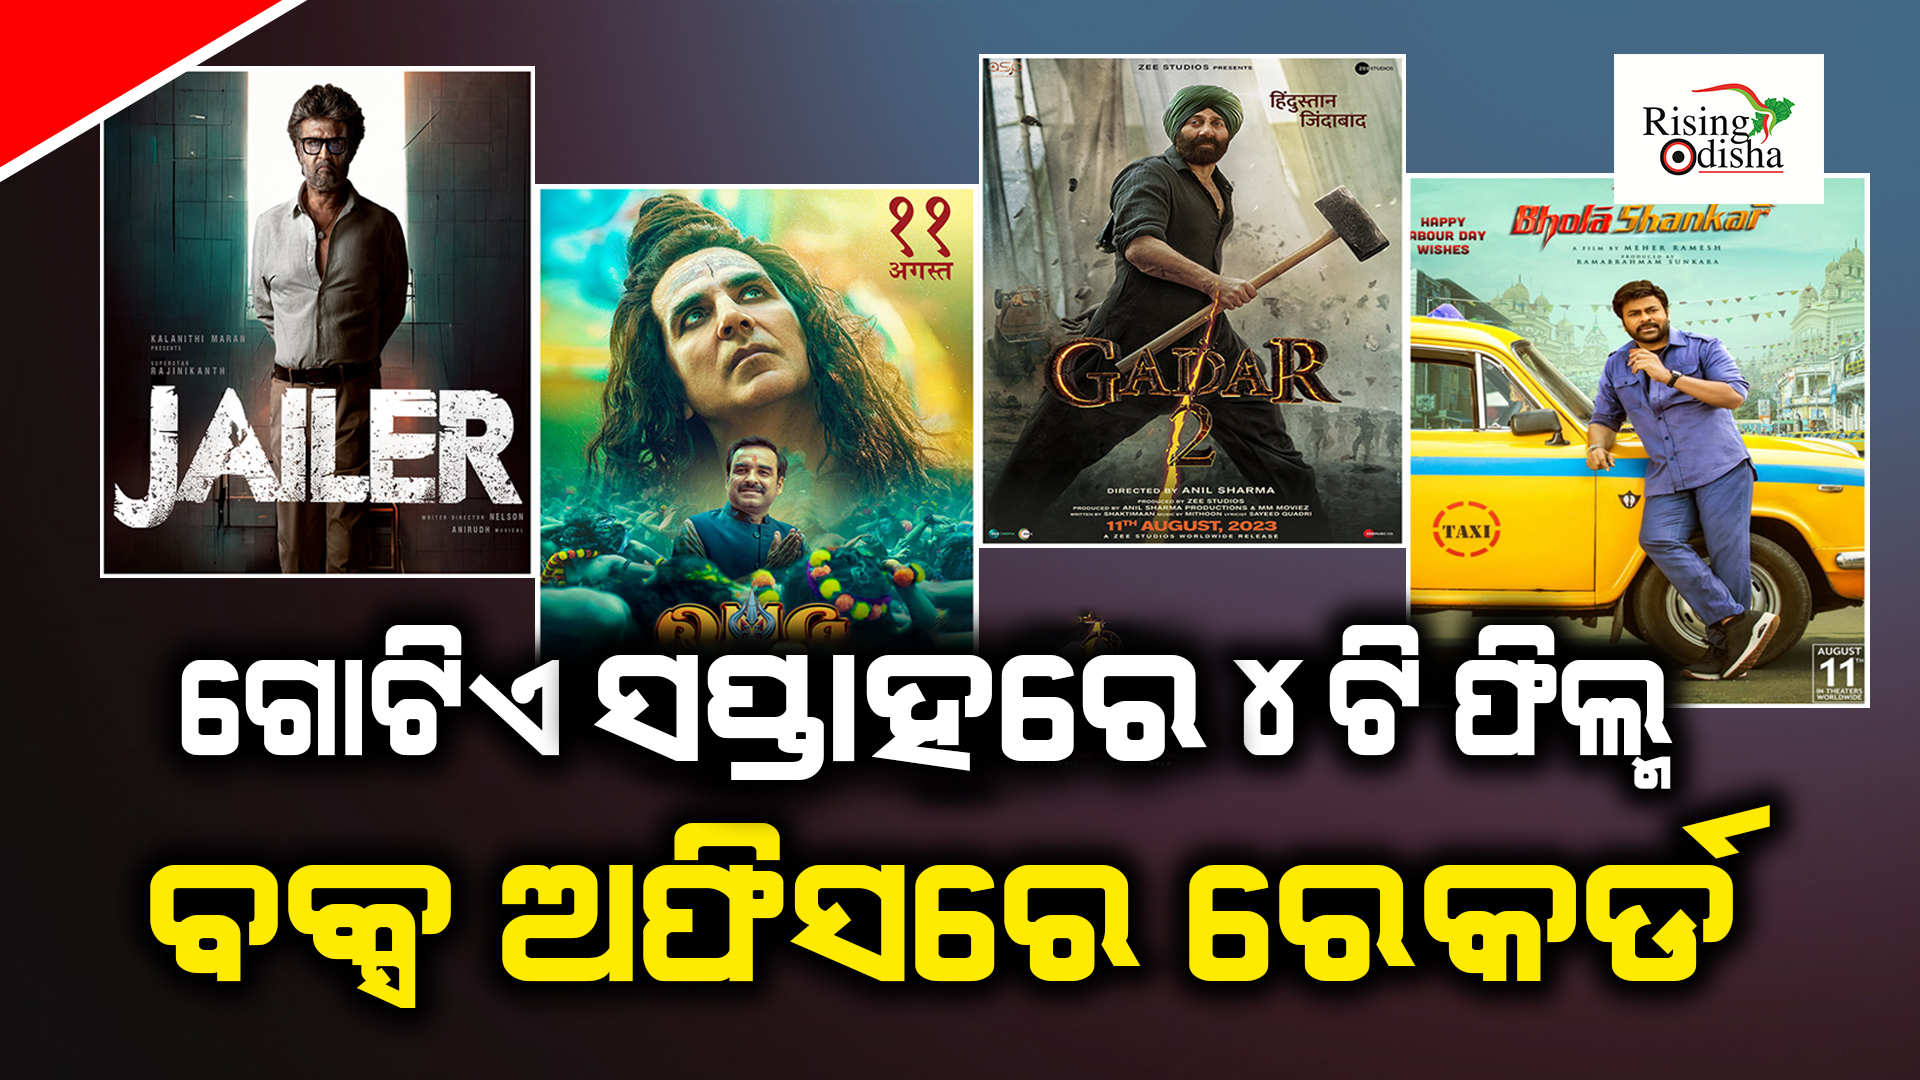 bollywood 2023 box office collection, jailer movie rajinikanth, sunny deol gadar 2 news, odia news, rising odisha